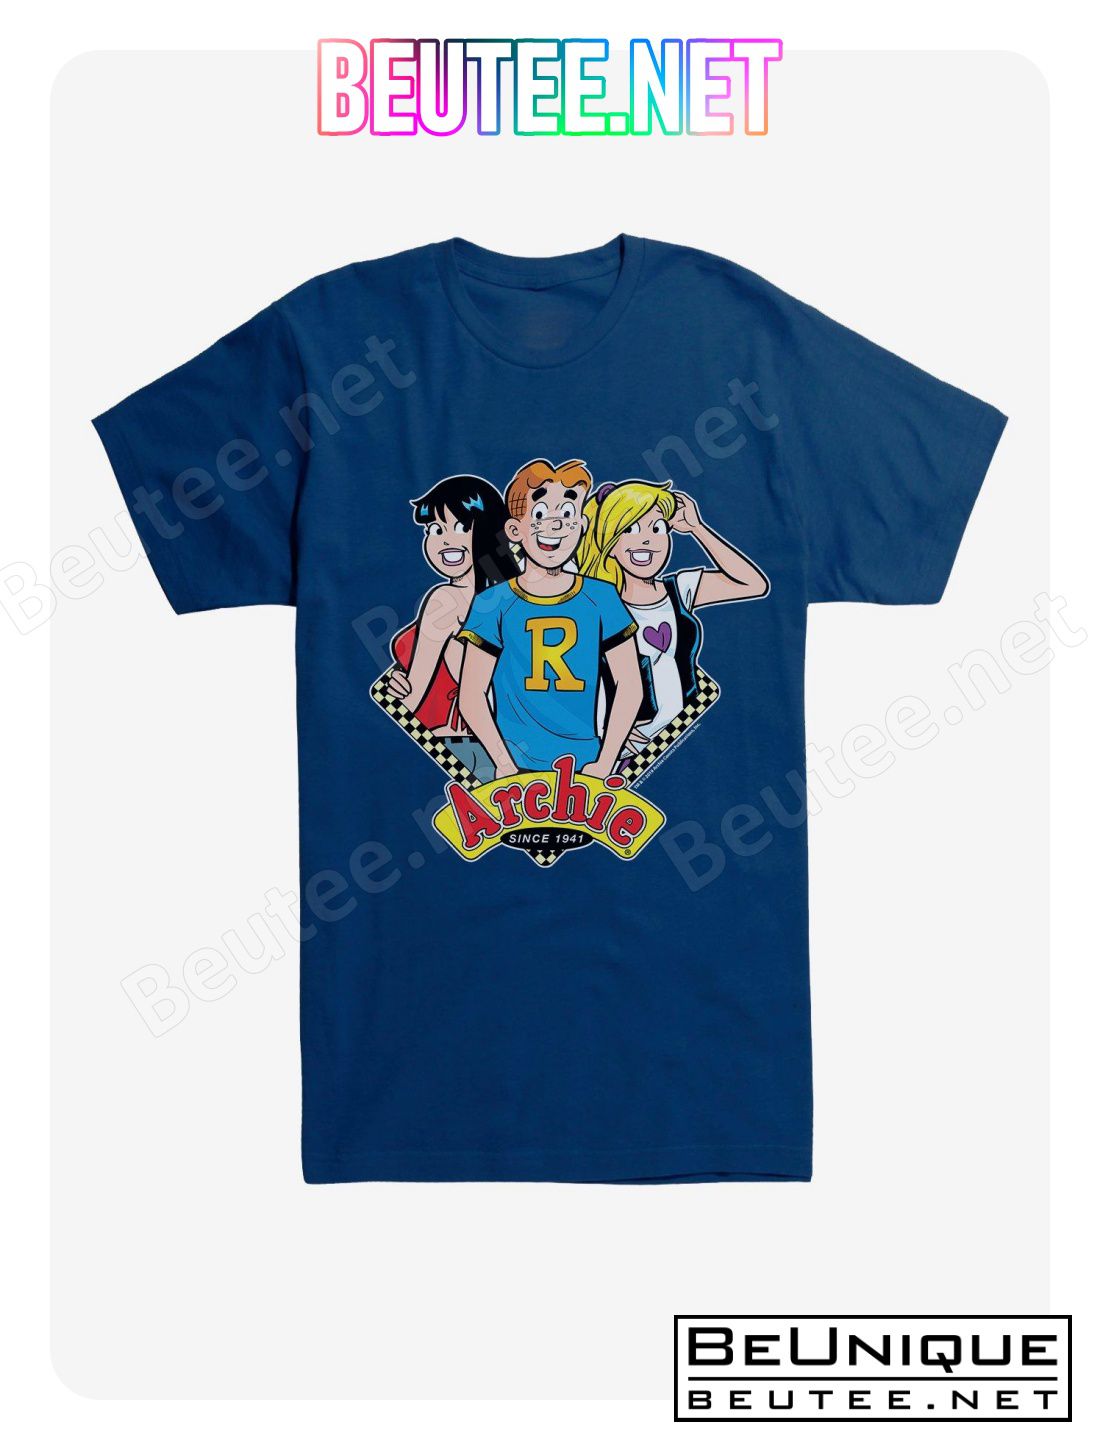 Archie Comics Trio T-Shirt